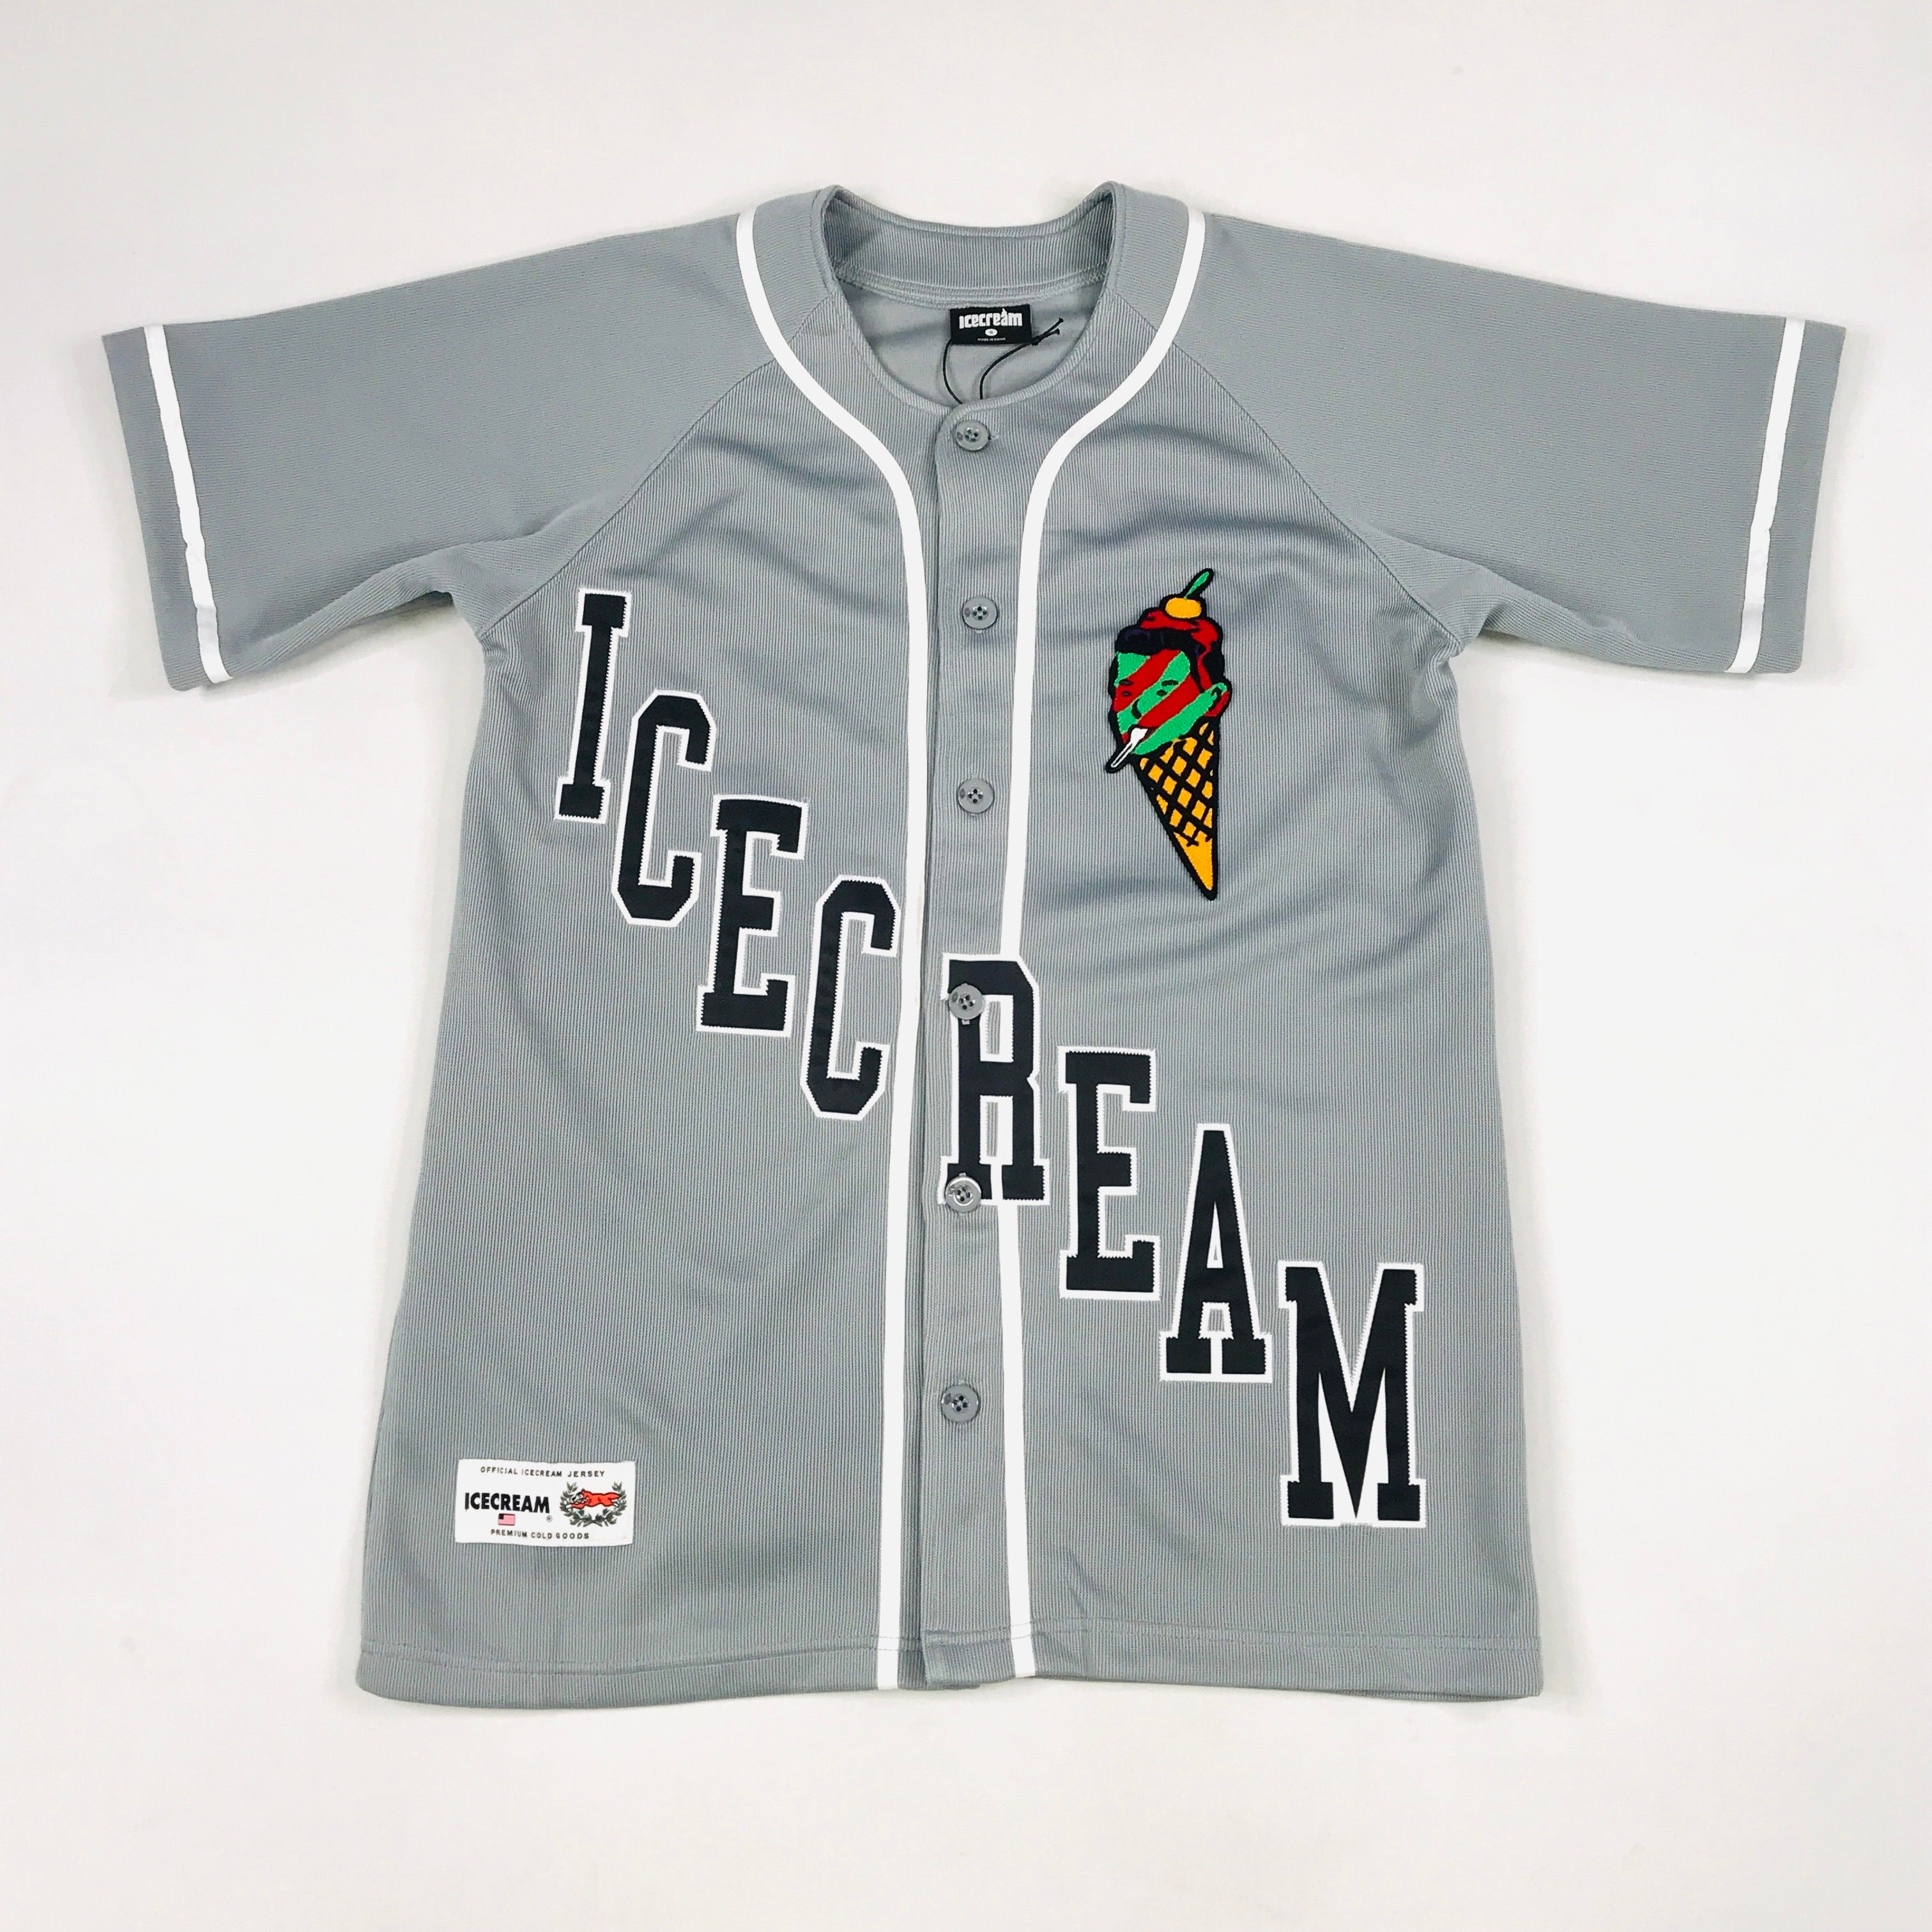 Icecream Homer SS knit baseball jersey in gray